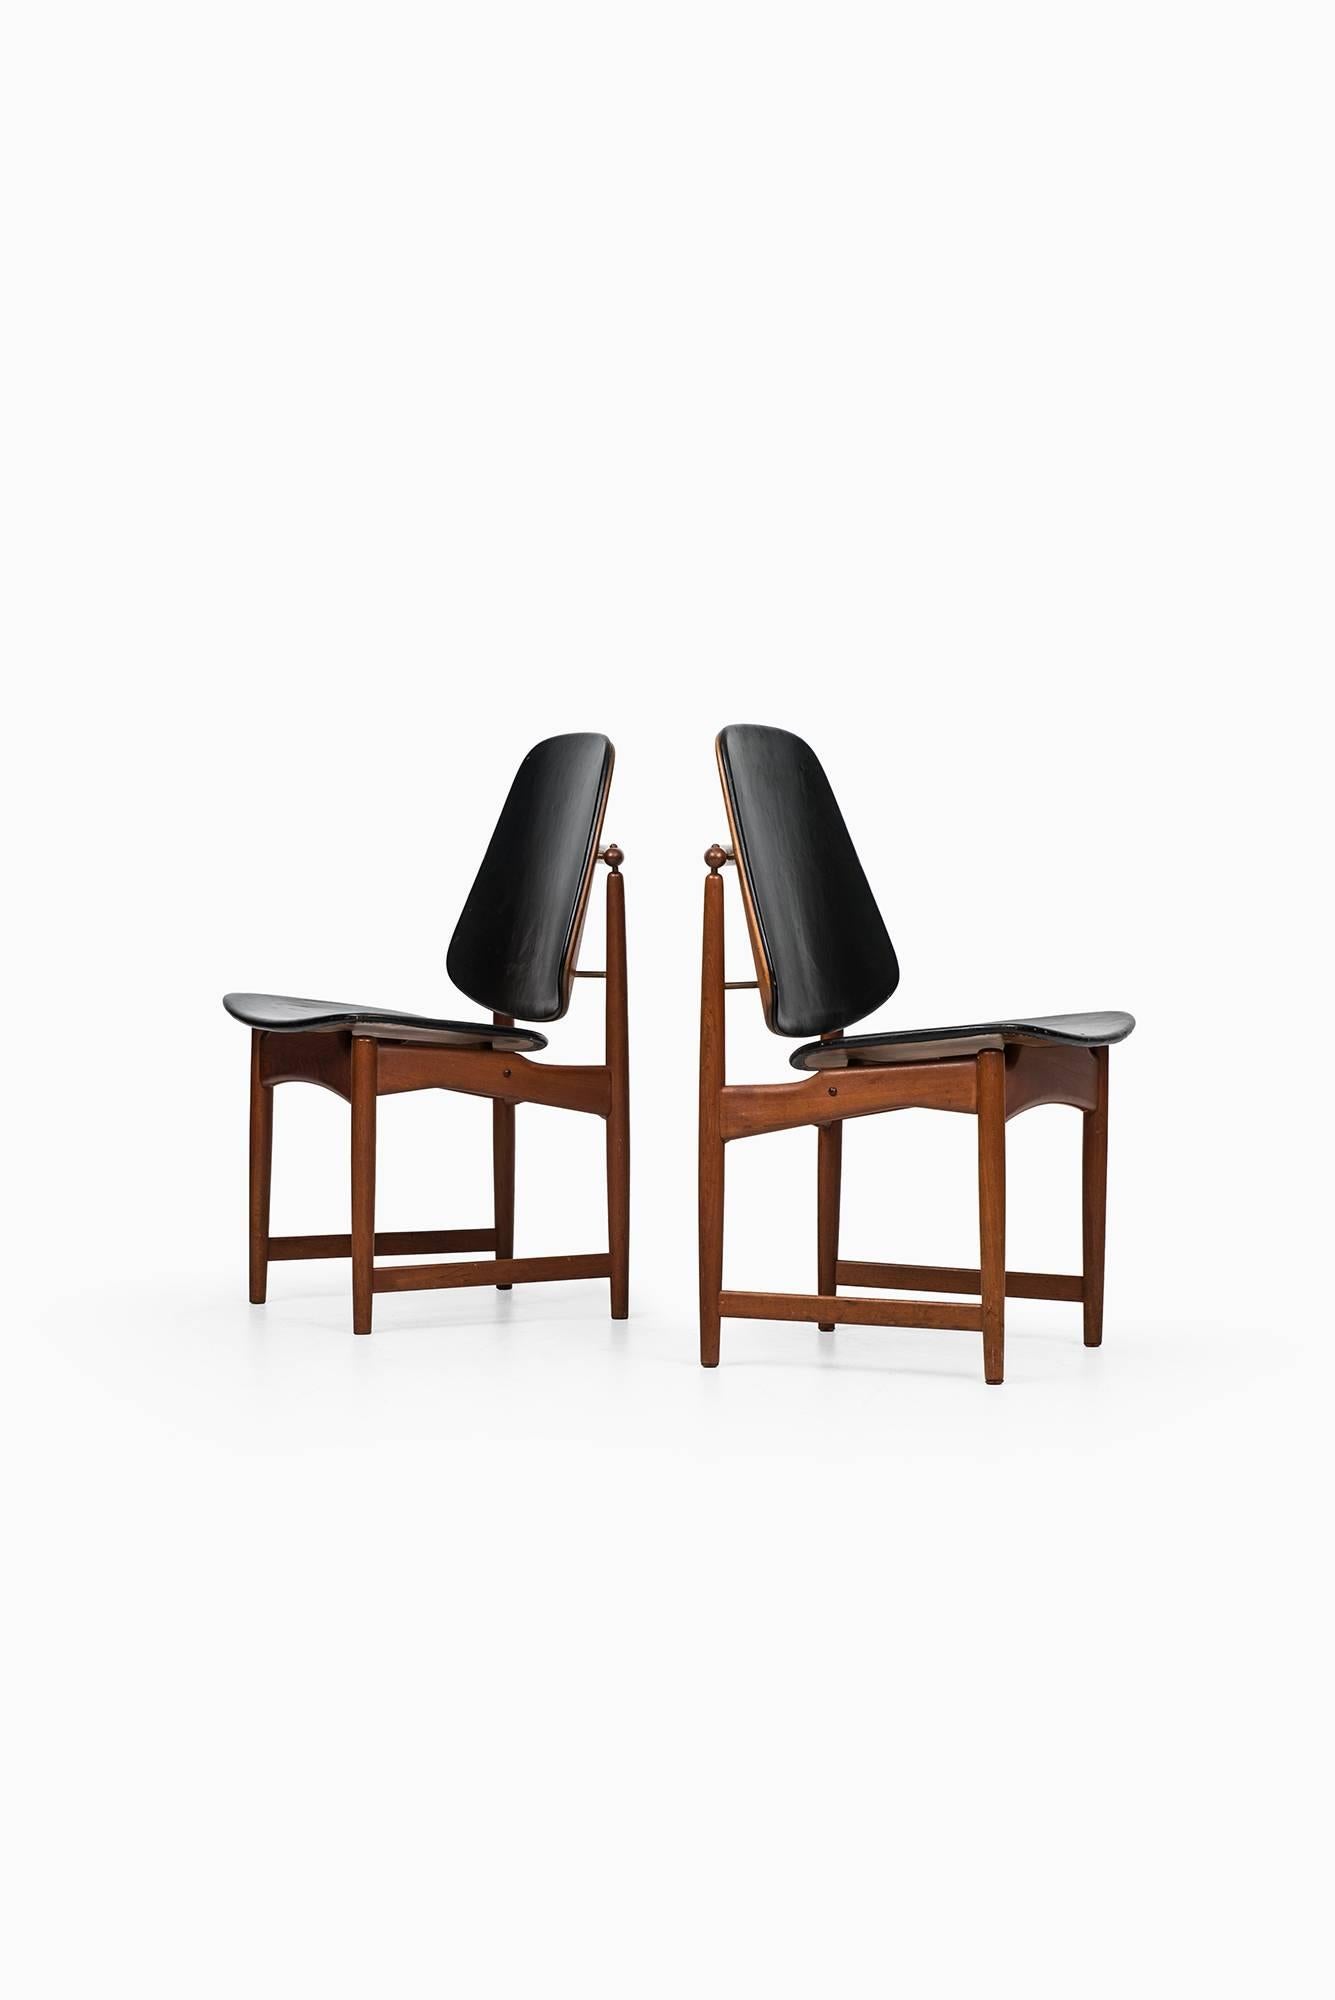 Scandinavian Modern Arne Hovmand-Olsen Dining Chairs by Onsild Møbelfabrik in Denmark